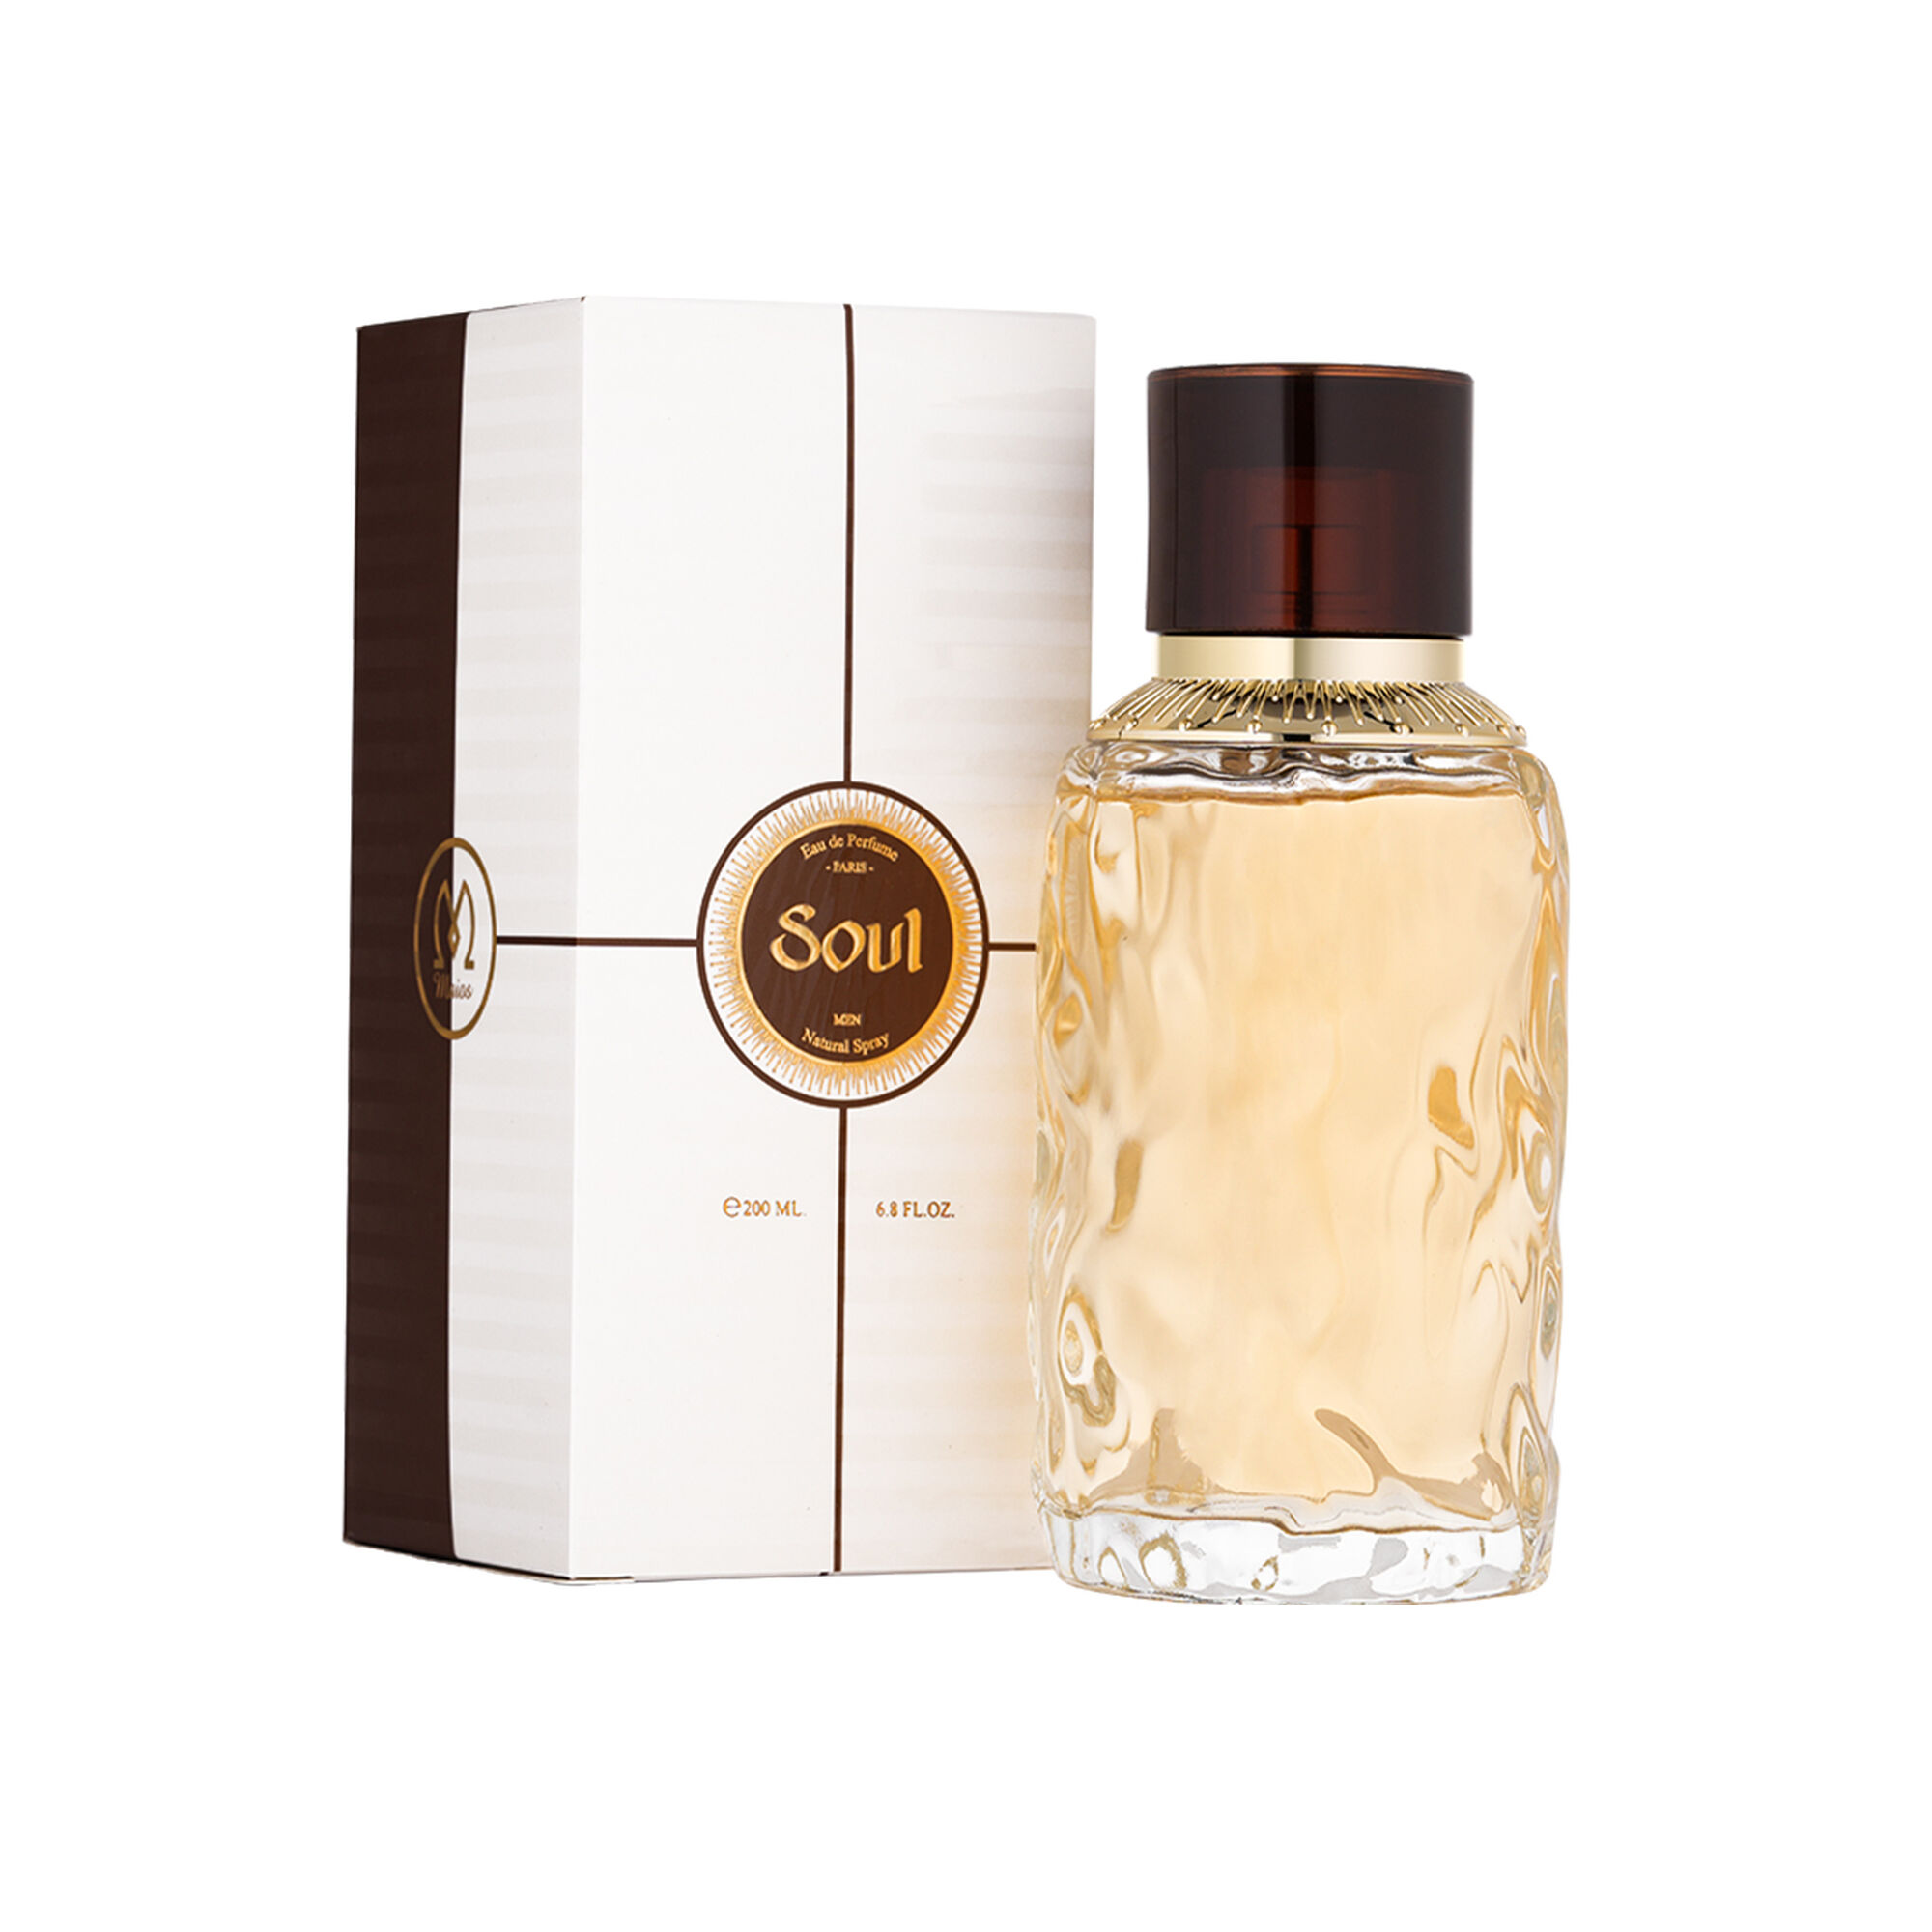 Soul Perfume by Maios 100ml 200 ml